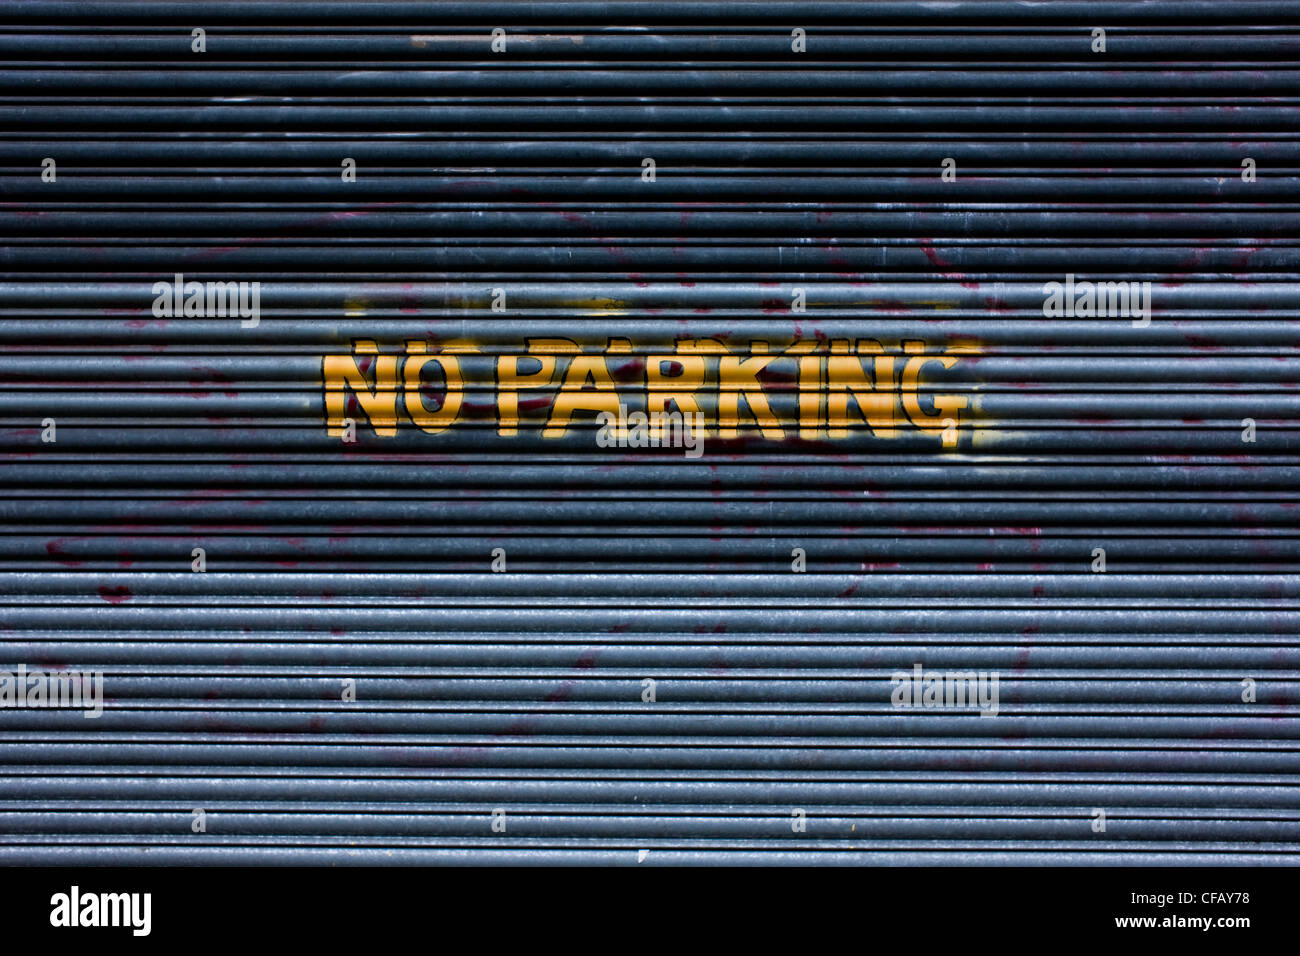 NO PARKING sign sur garage clôture, Londres. Banque D'Images